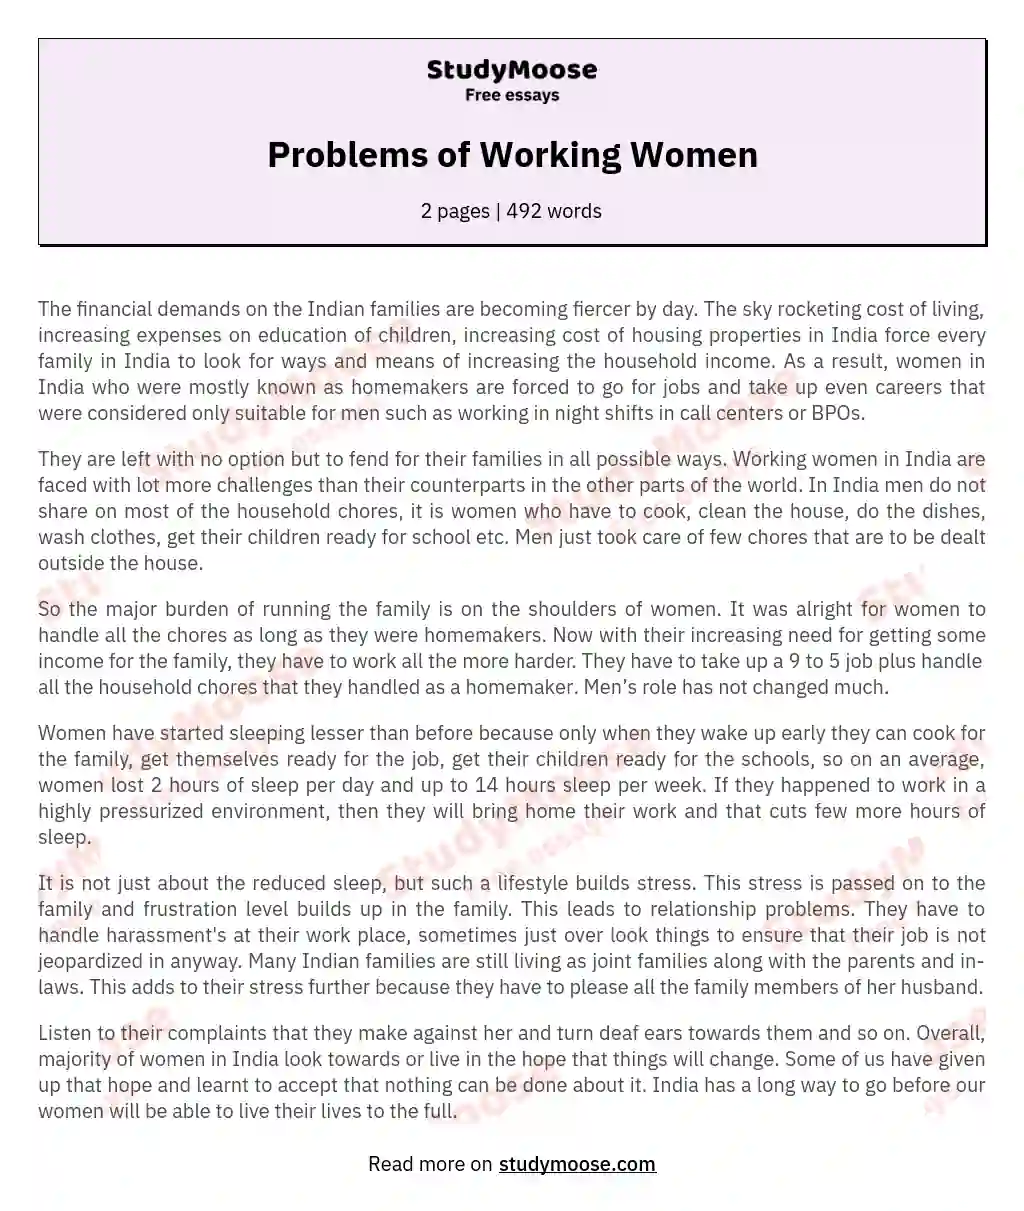 Problems of Working Women essay